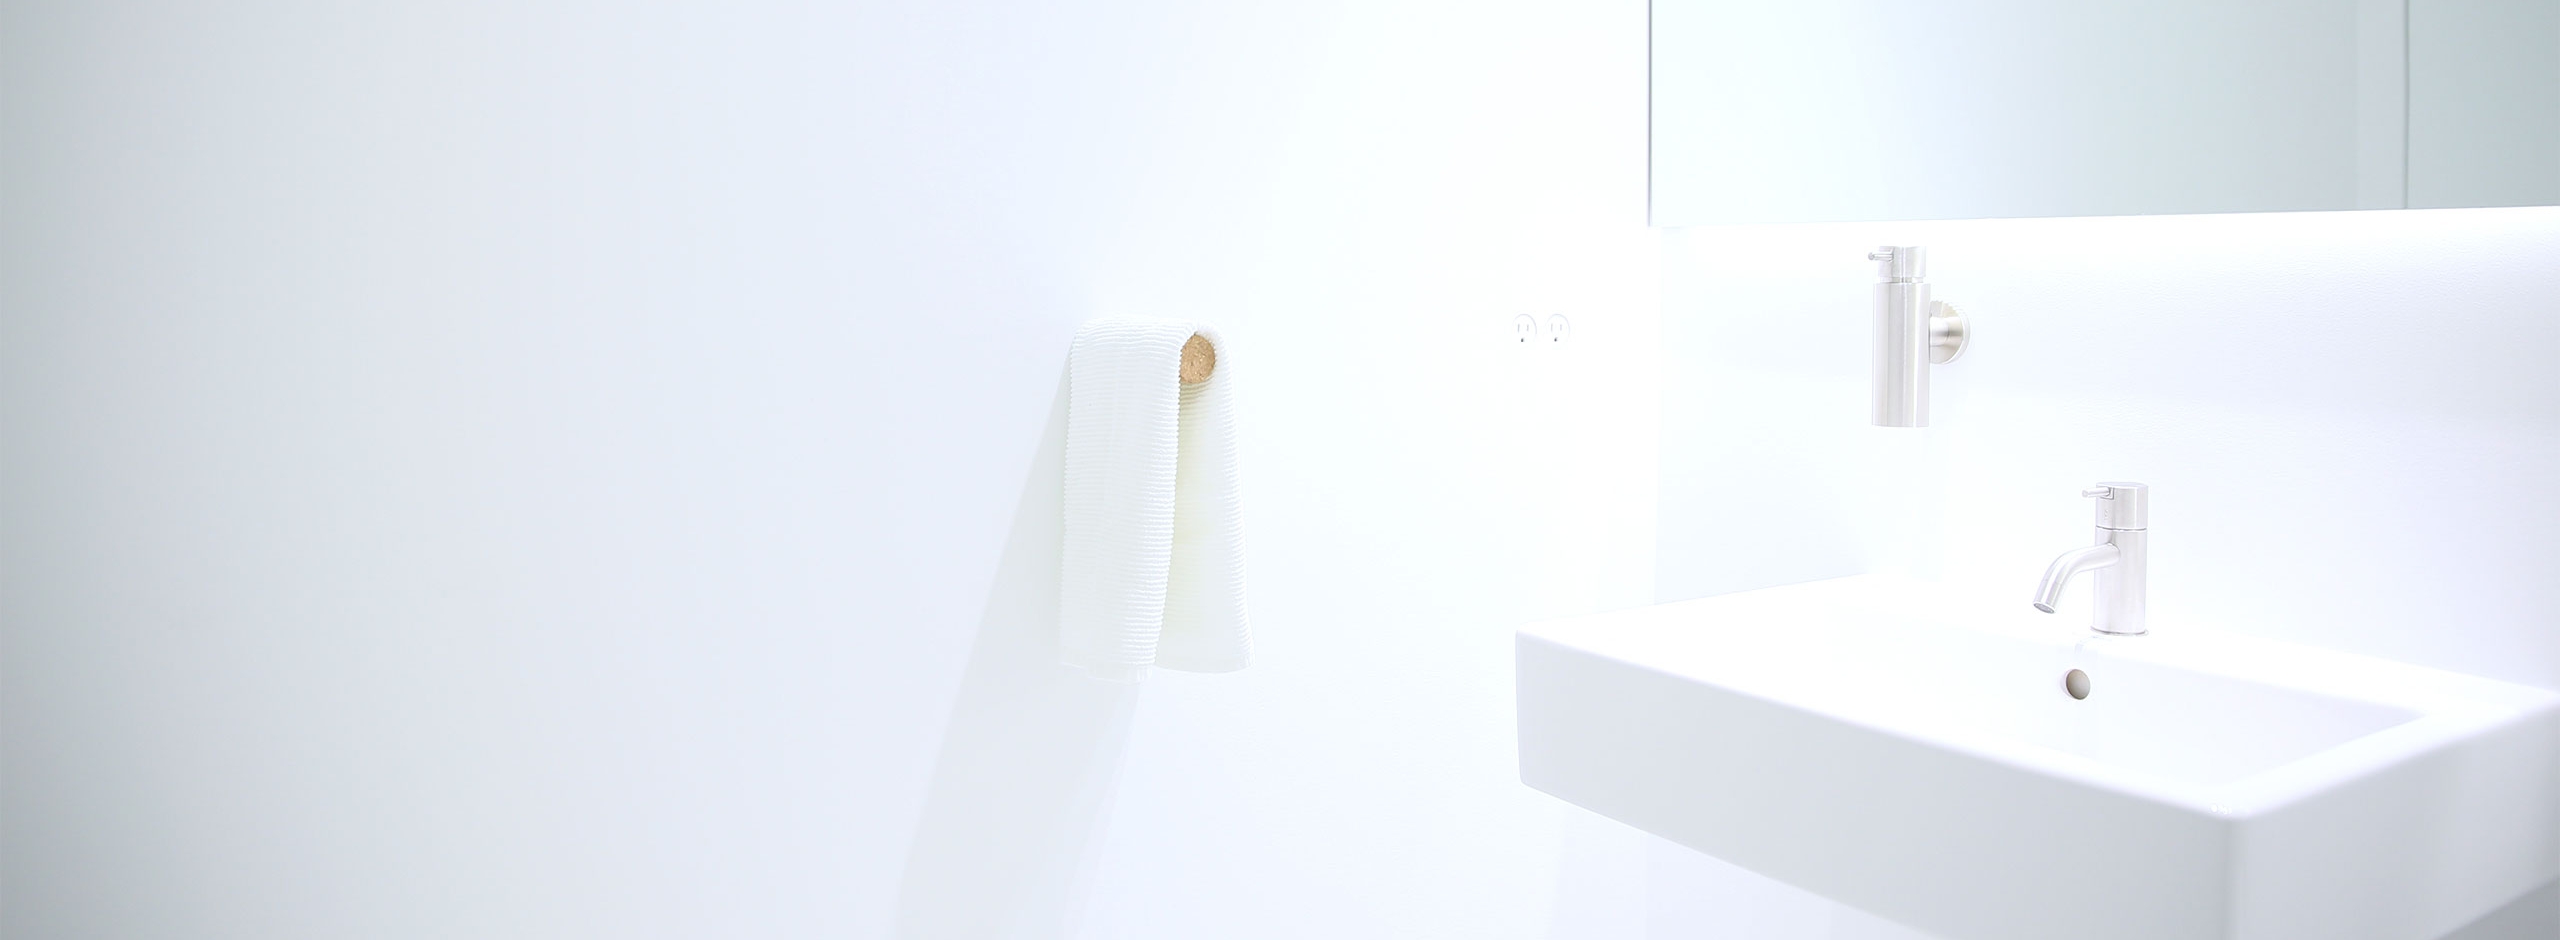 cork peg as a towel hanger in a modern bathroom